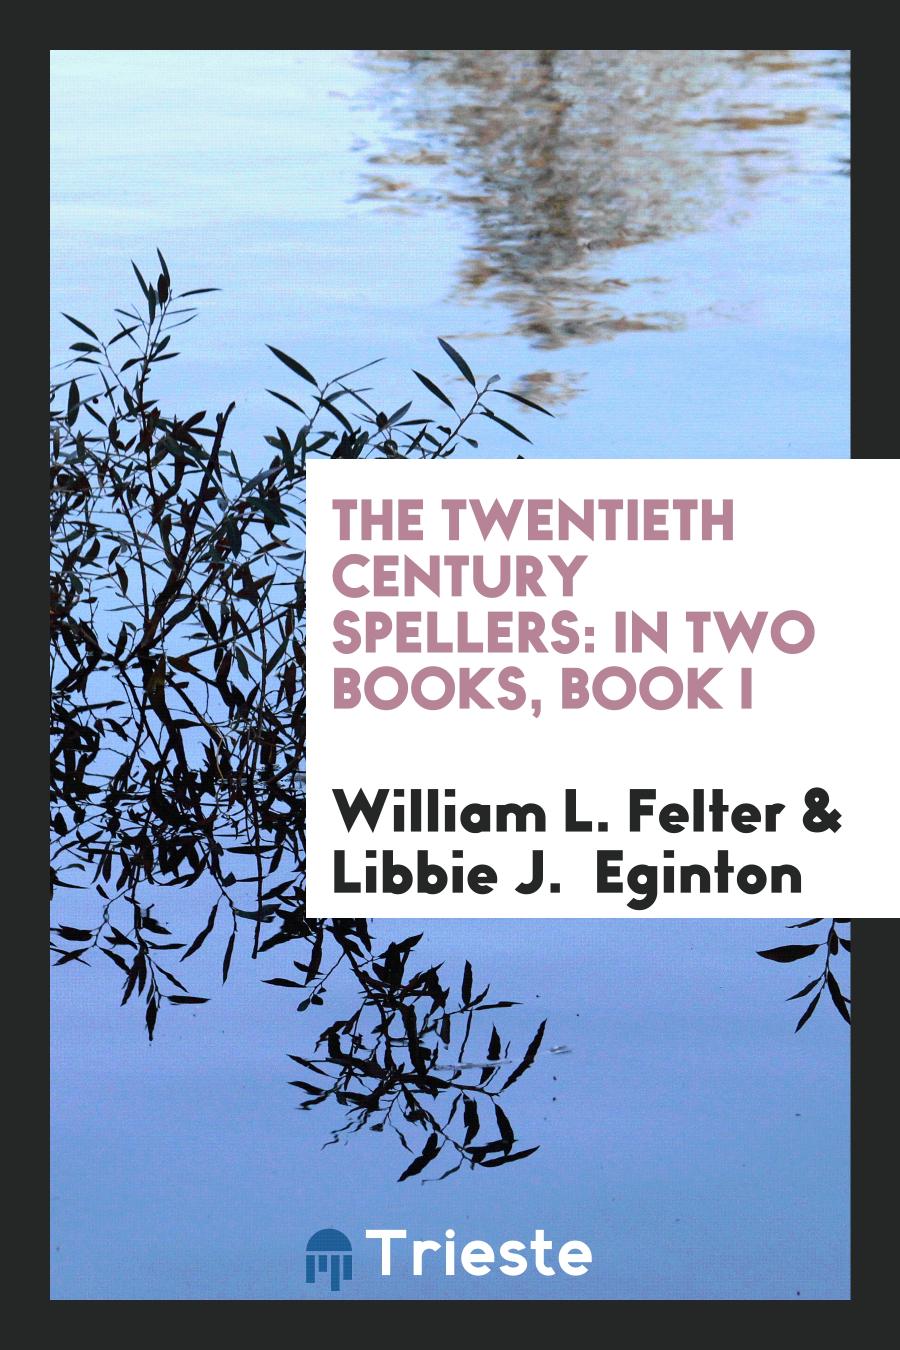 The Twentieth Century Spellers: In Two Books, Book I